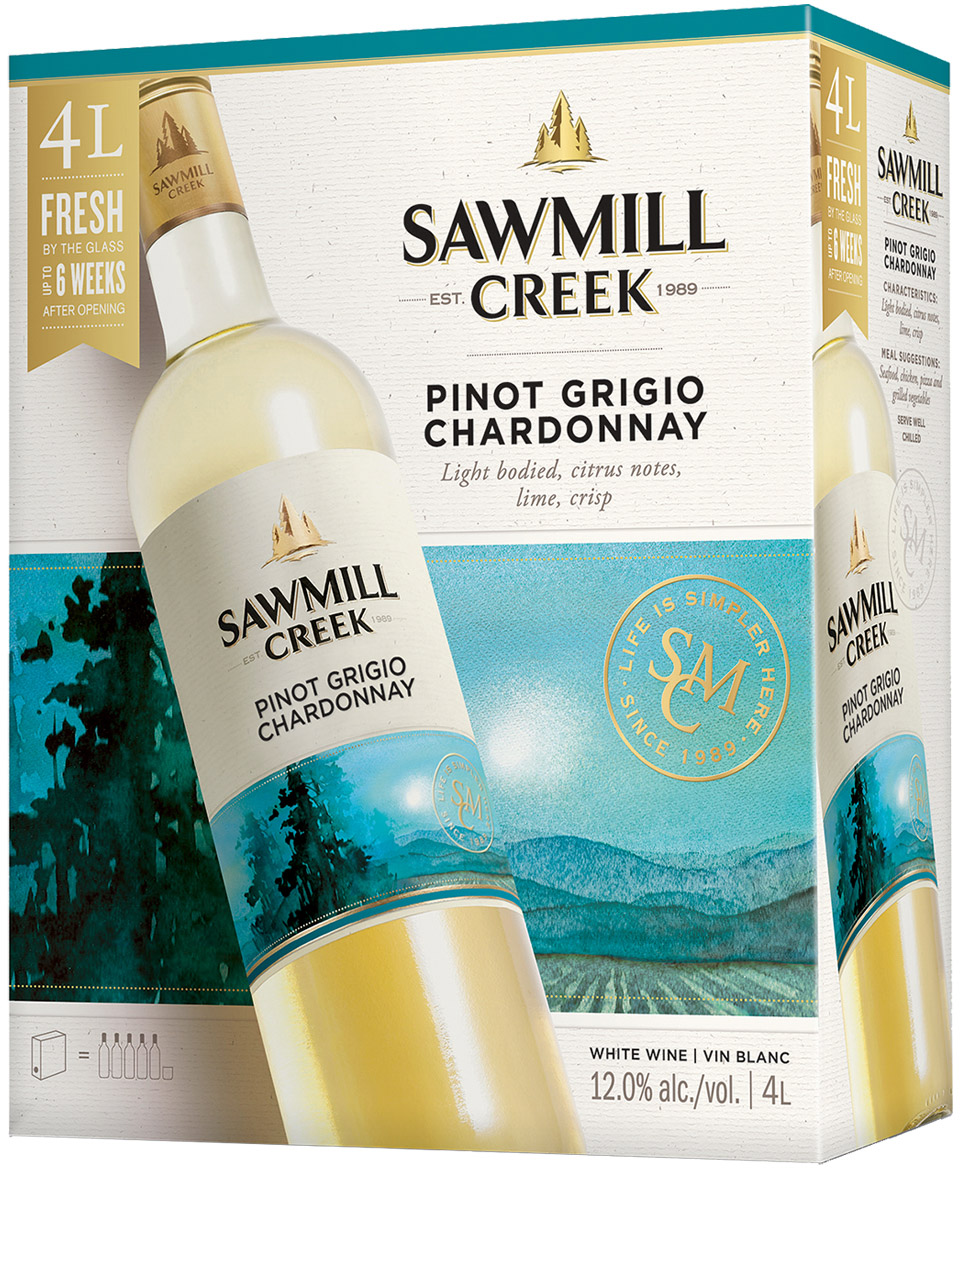 Sawmill Creek Pinot Grigio Chardonnay